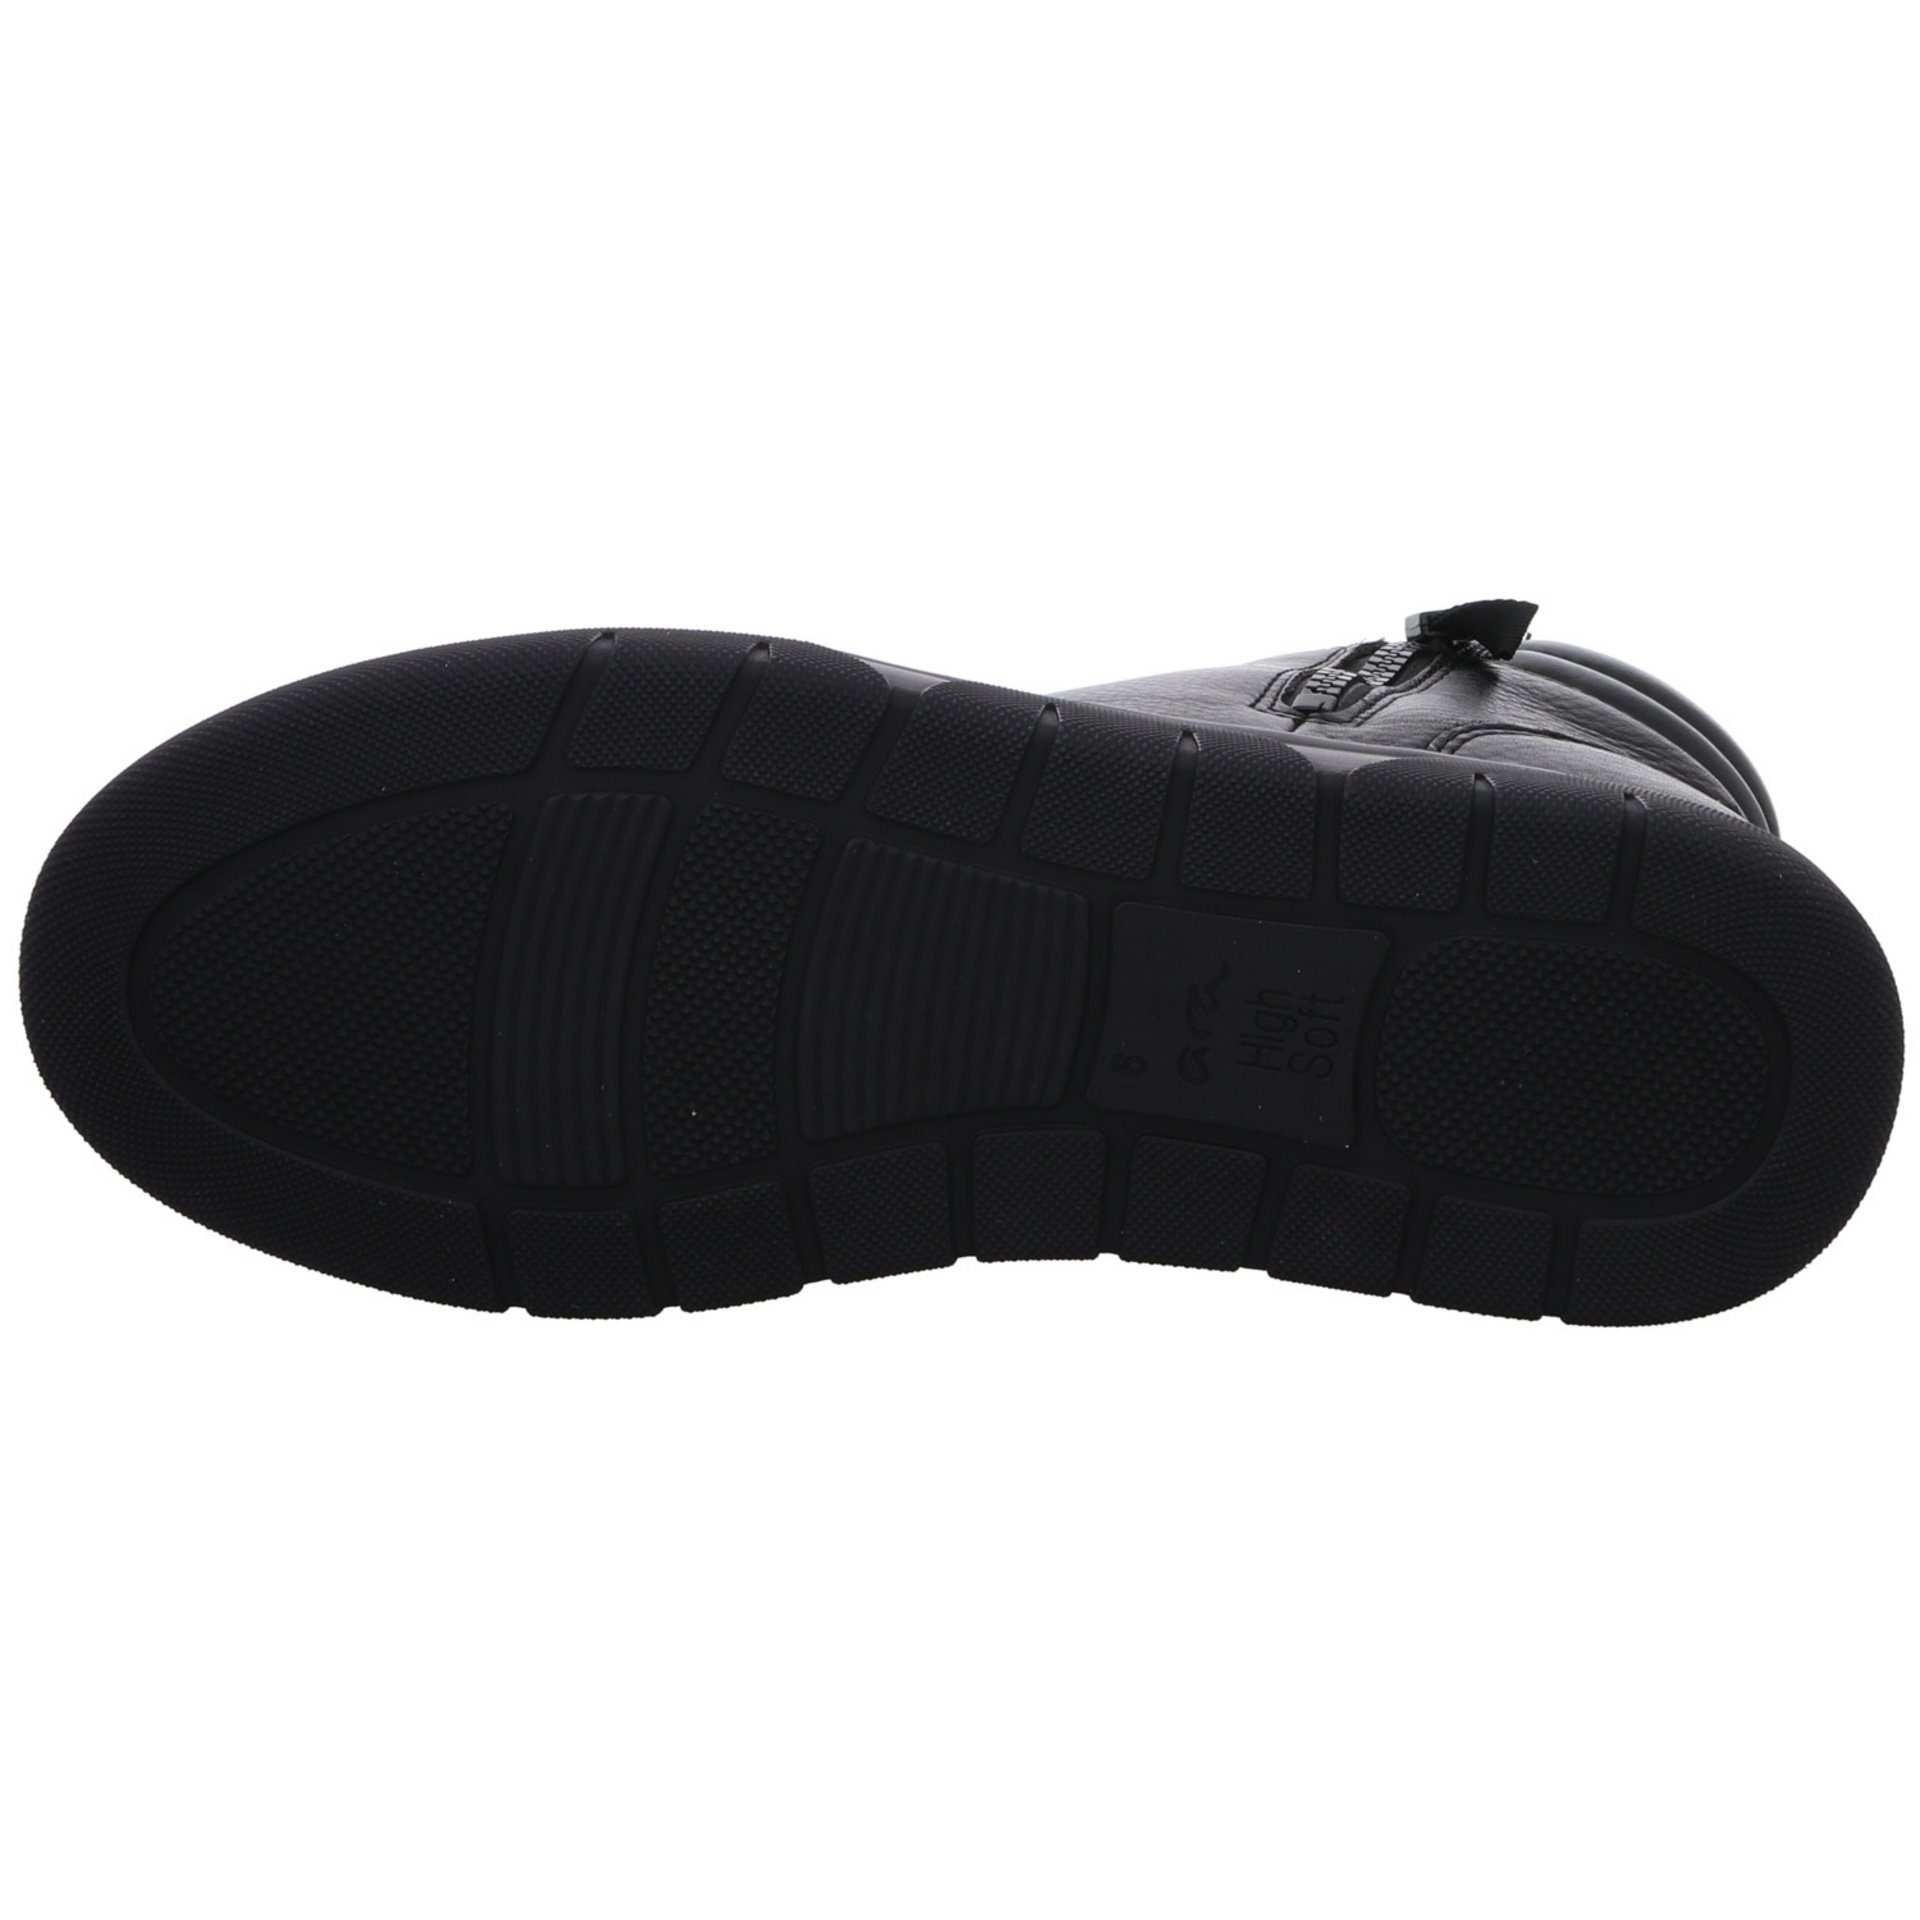 Damen Schnürstiefelette Sneaker schwarz Rom-Sport Glattleder 046706 Ara Schuhe Sneaker 2.0